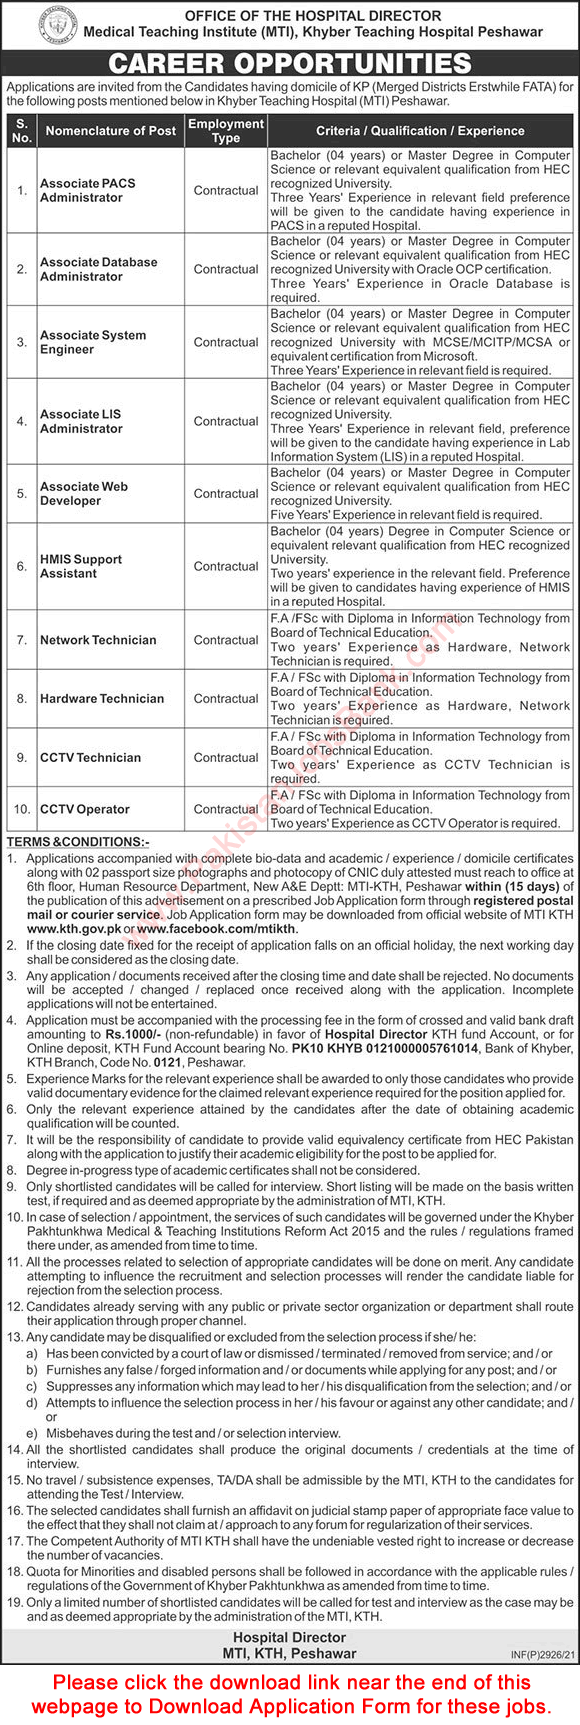 Khyber Teaching Hospital Peshawar Jobs June 2021 MTI Application Form Download Latest